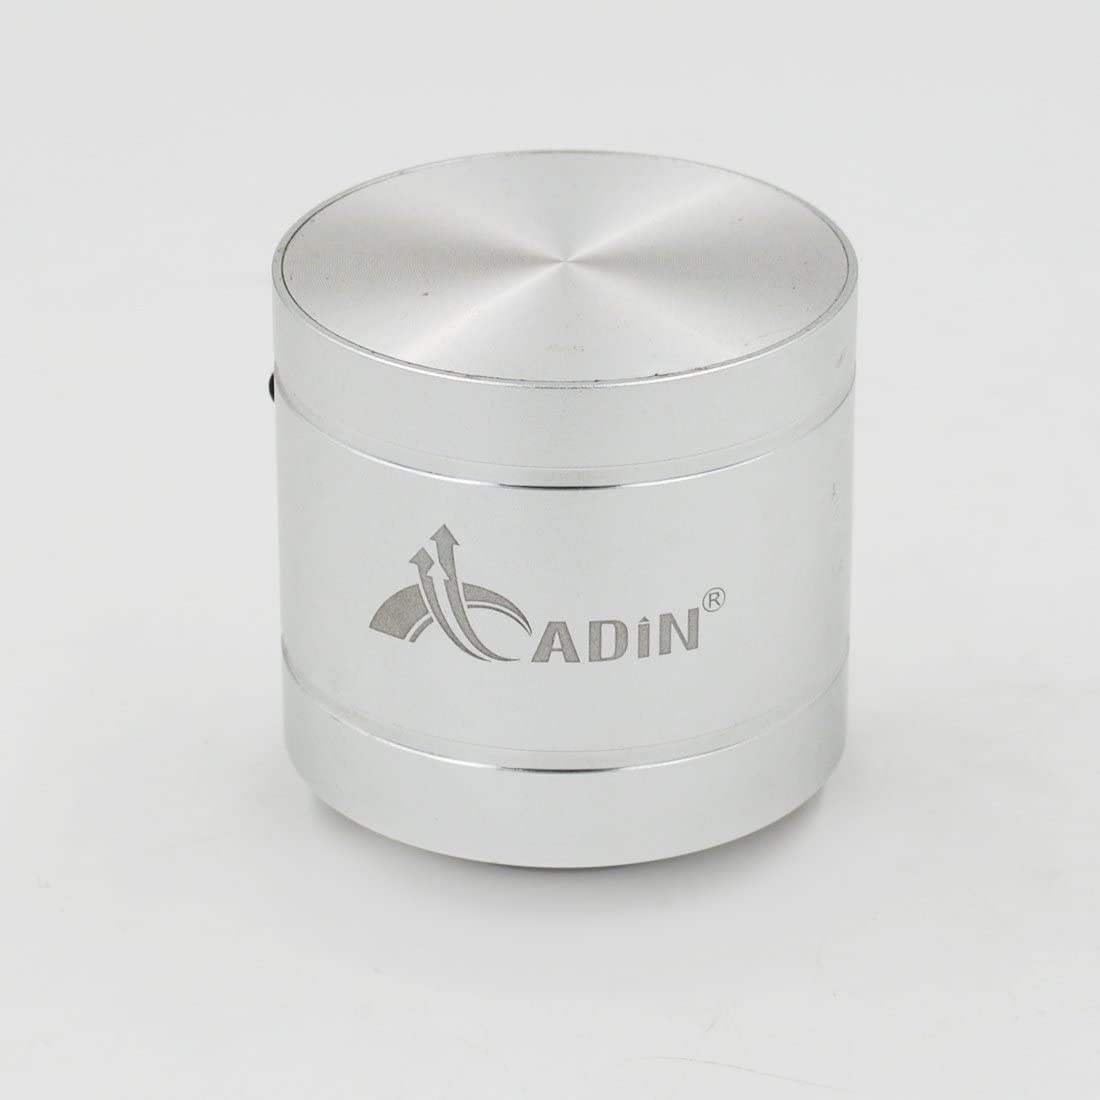 Adin(エイディン) 振動スピーカー d3の商品画像3 